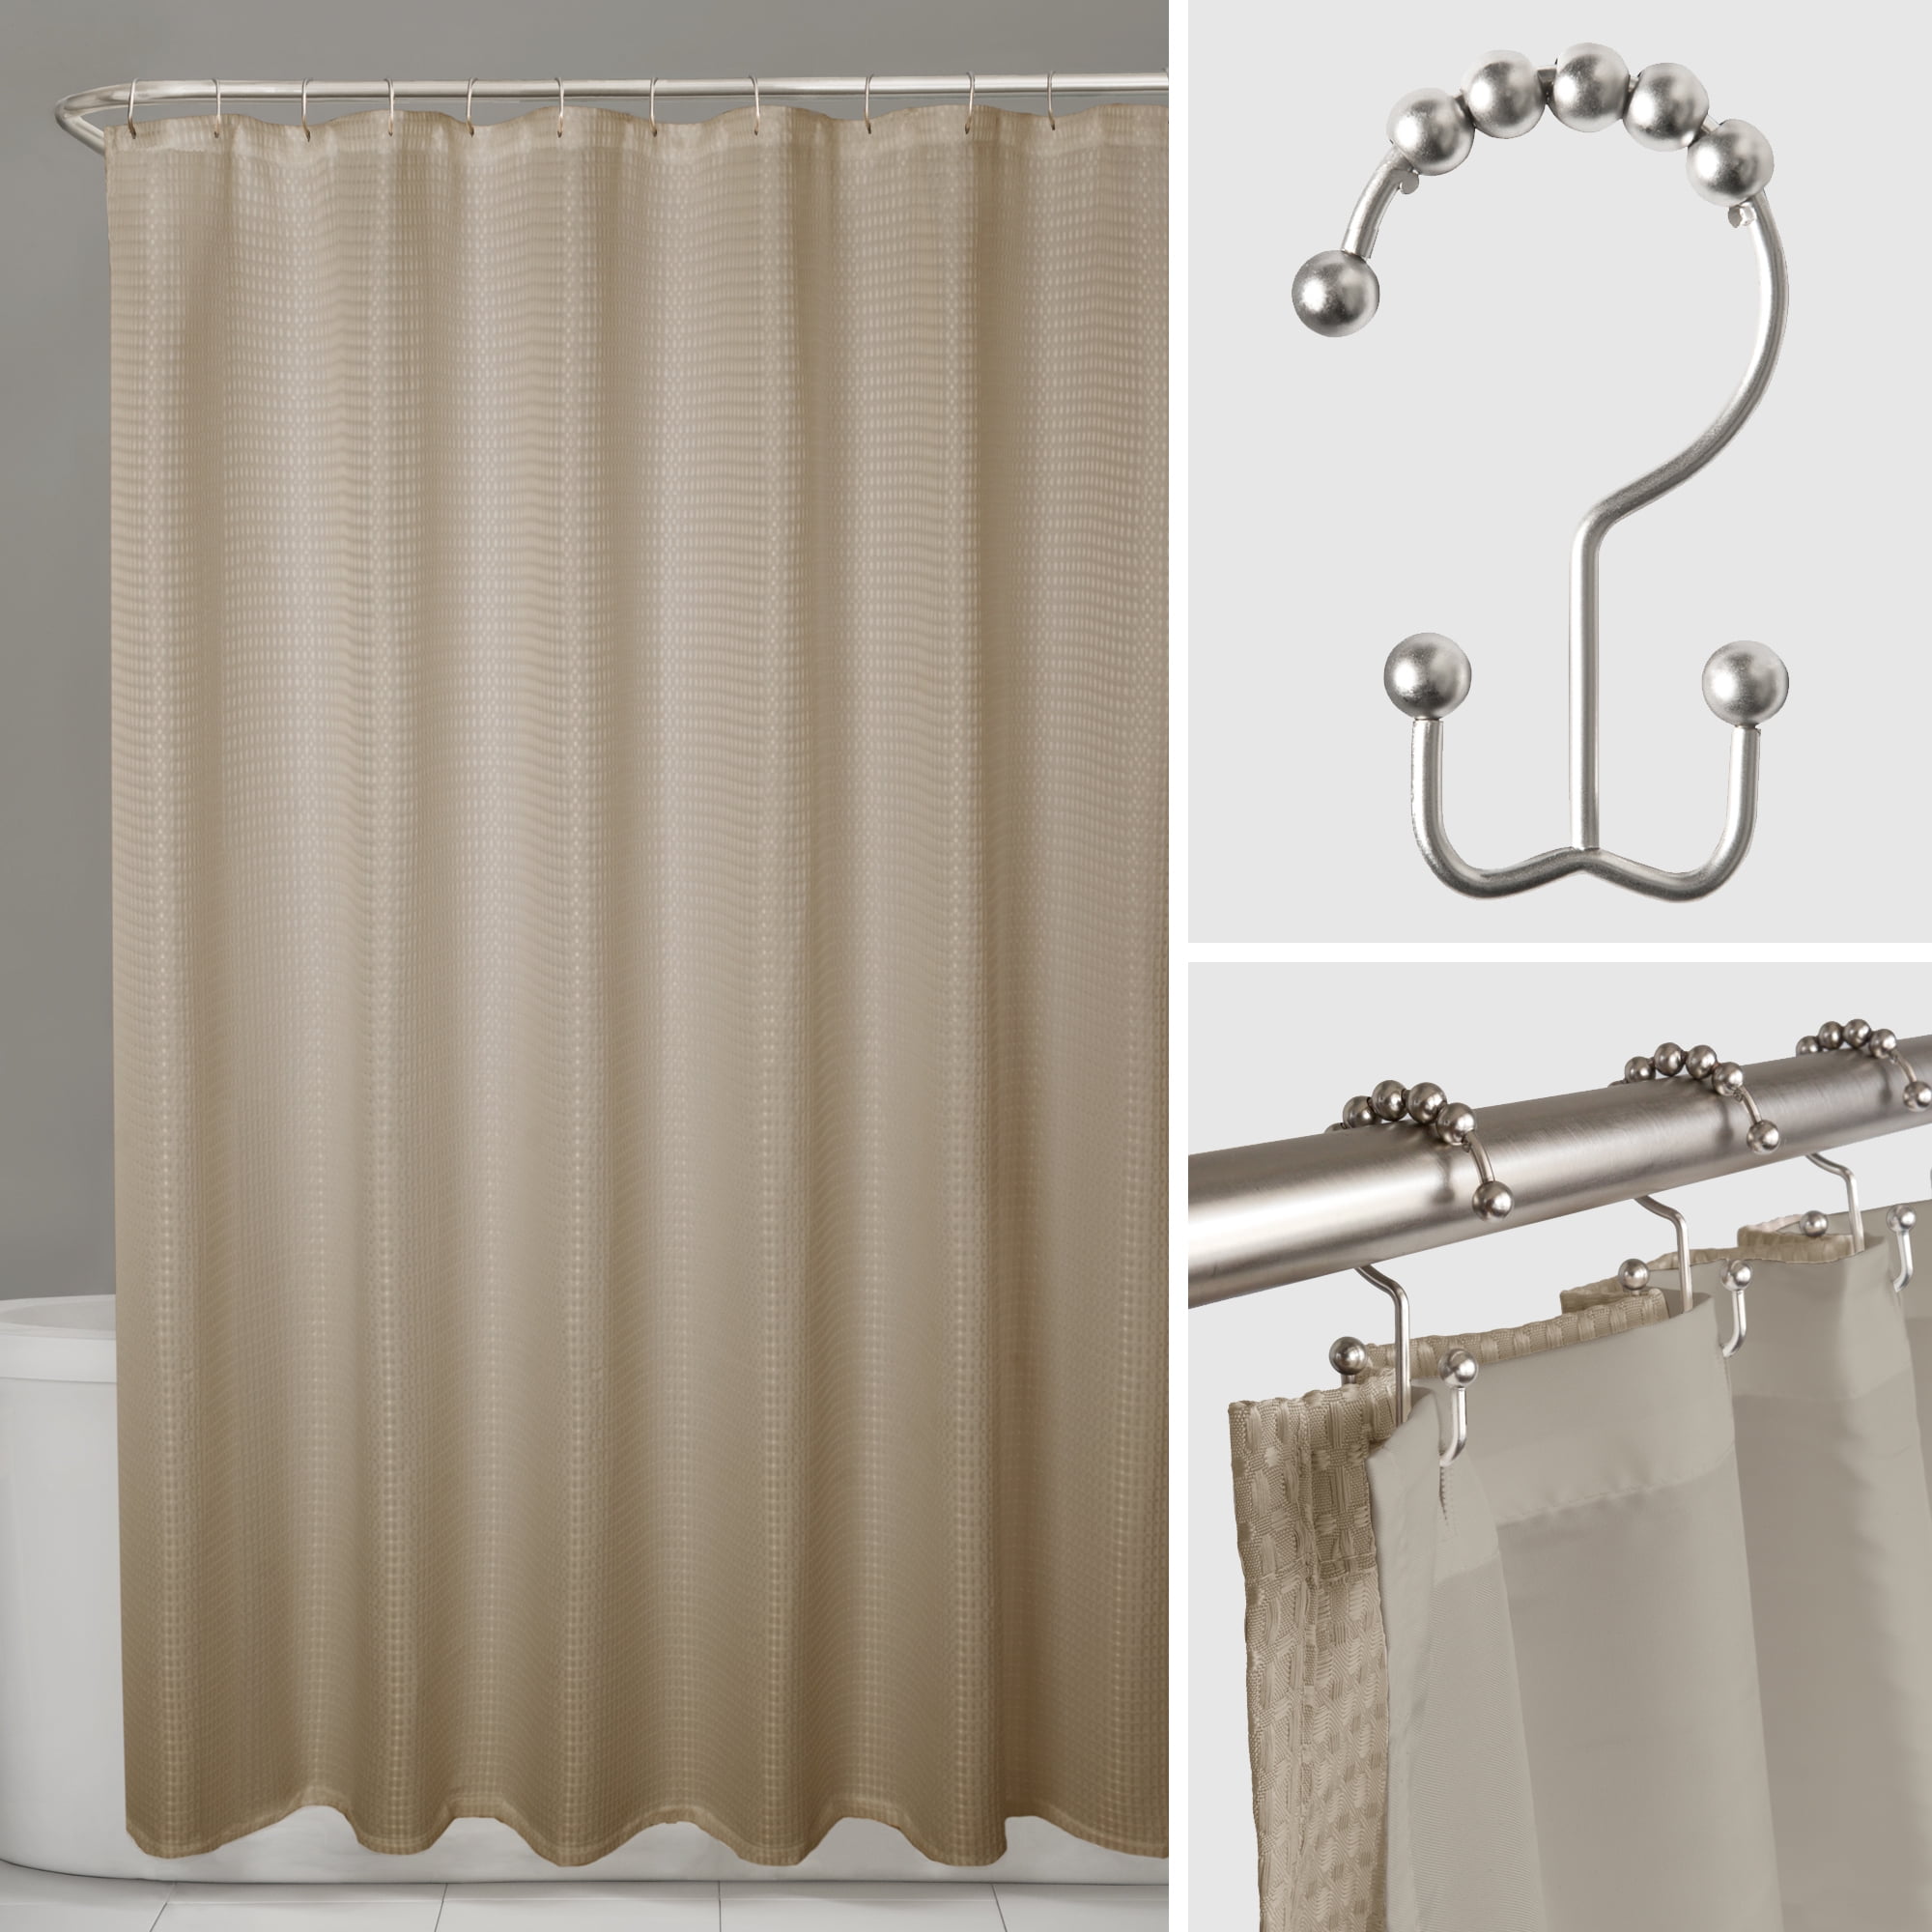 Maytex Stevenson 14 Piece Shower Set, Maytex Water Repellent Fabric Shower Curtain Liner